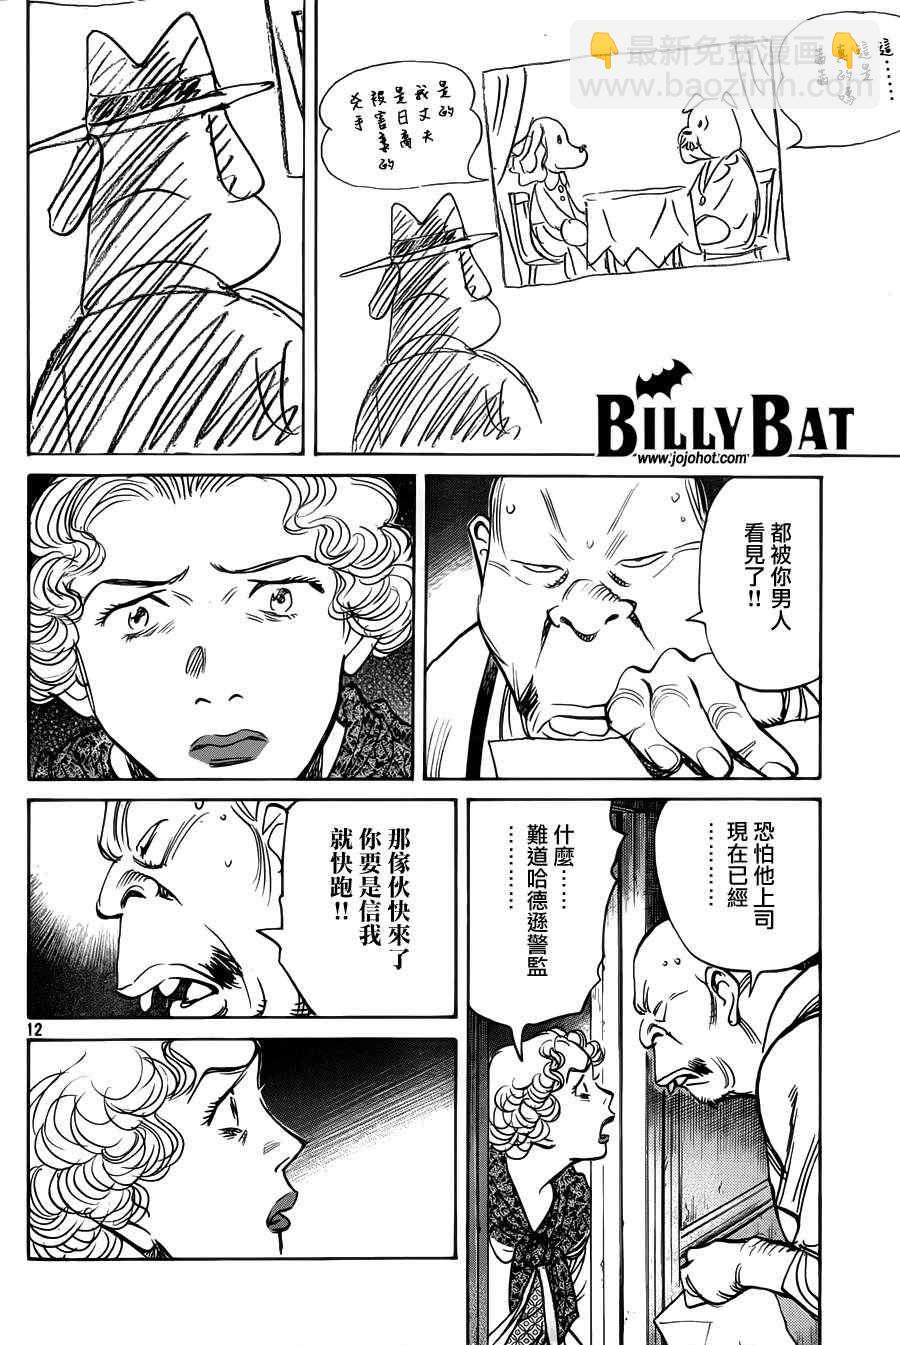 Billy_Bat - 第84話 - 1